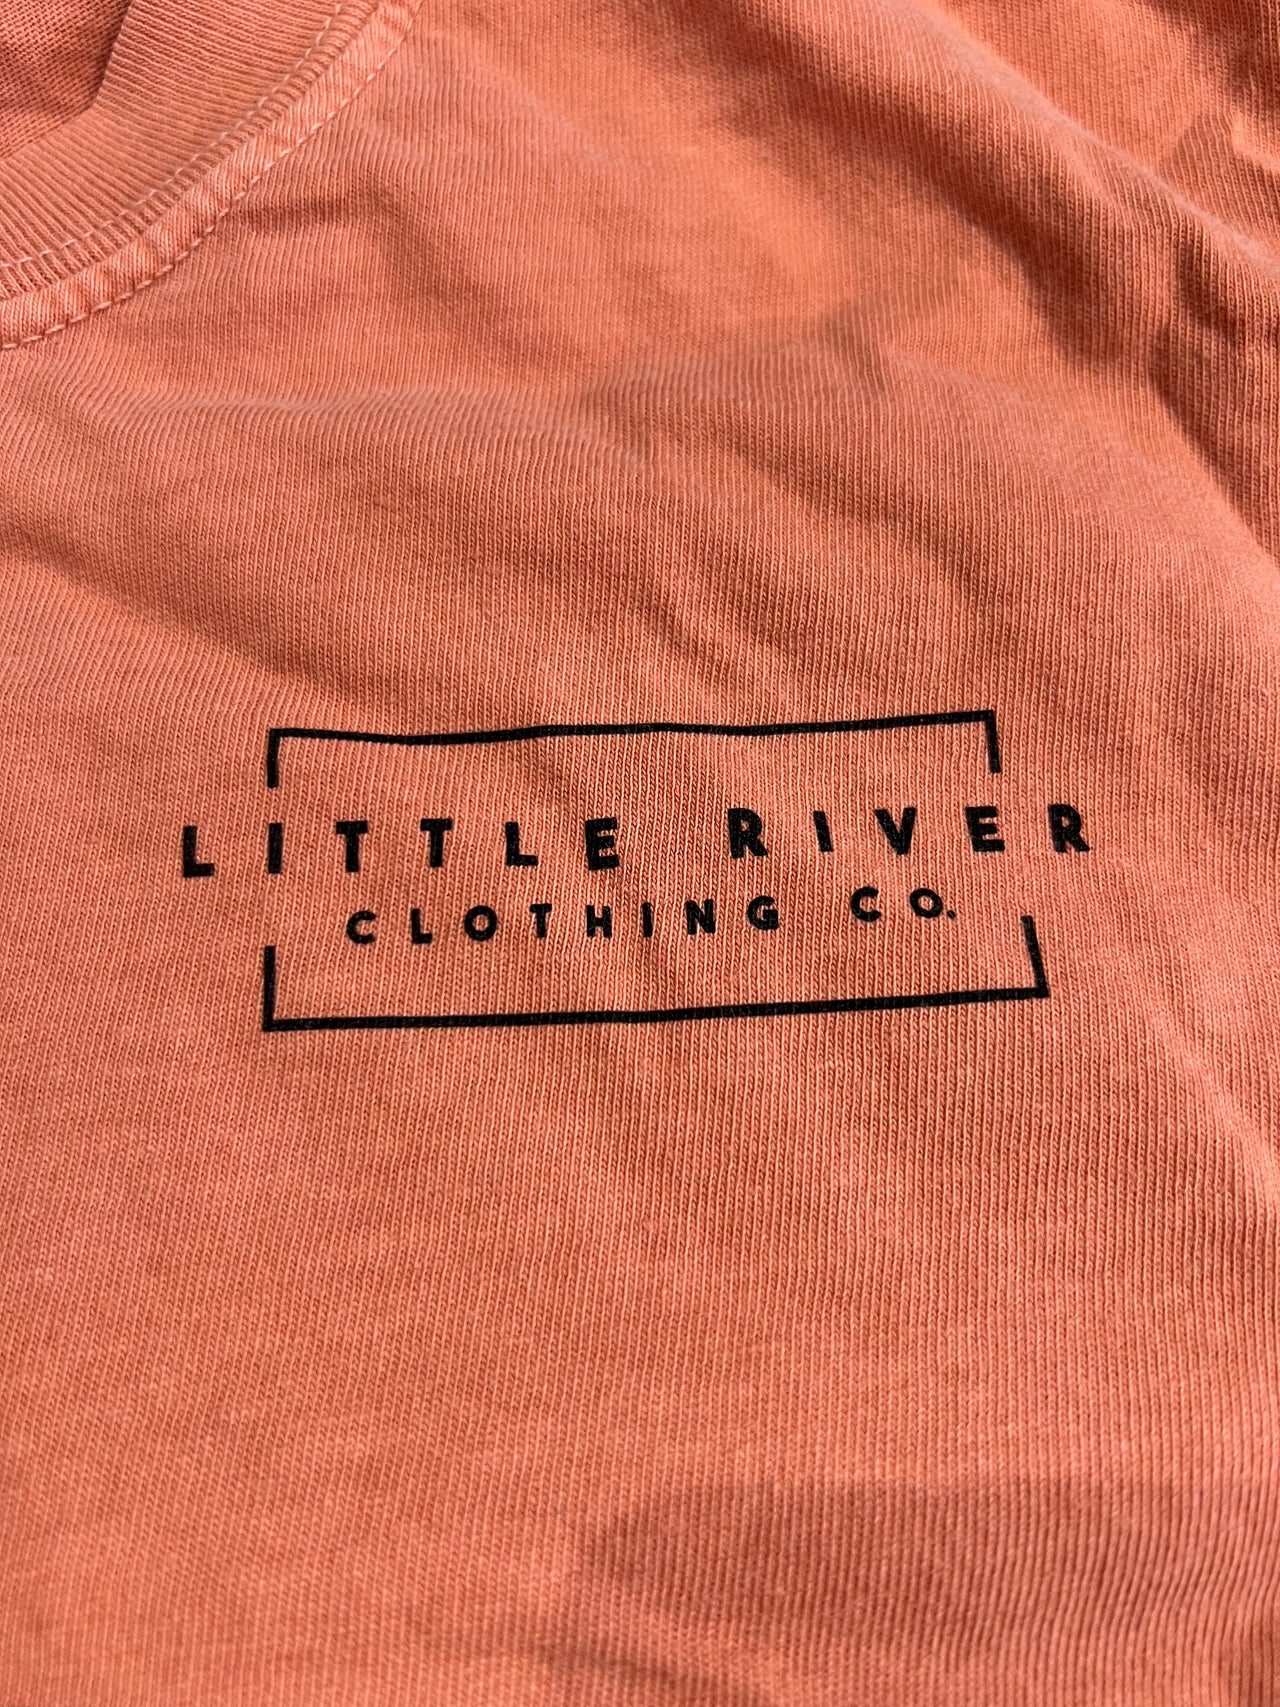 Little River Train SS Tee - Terracotta